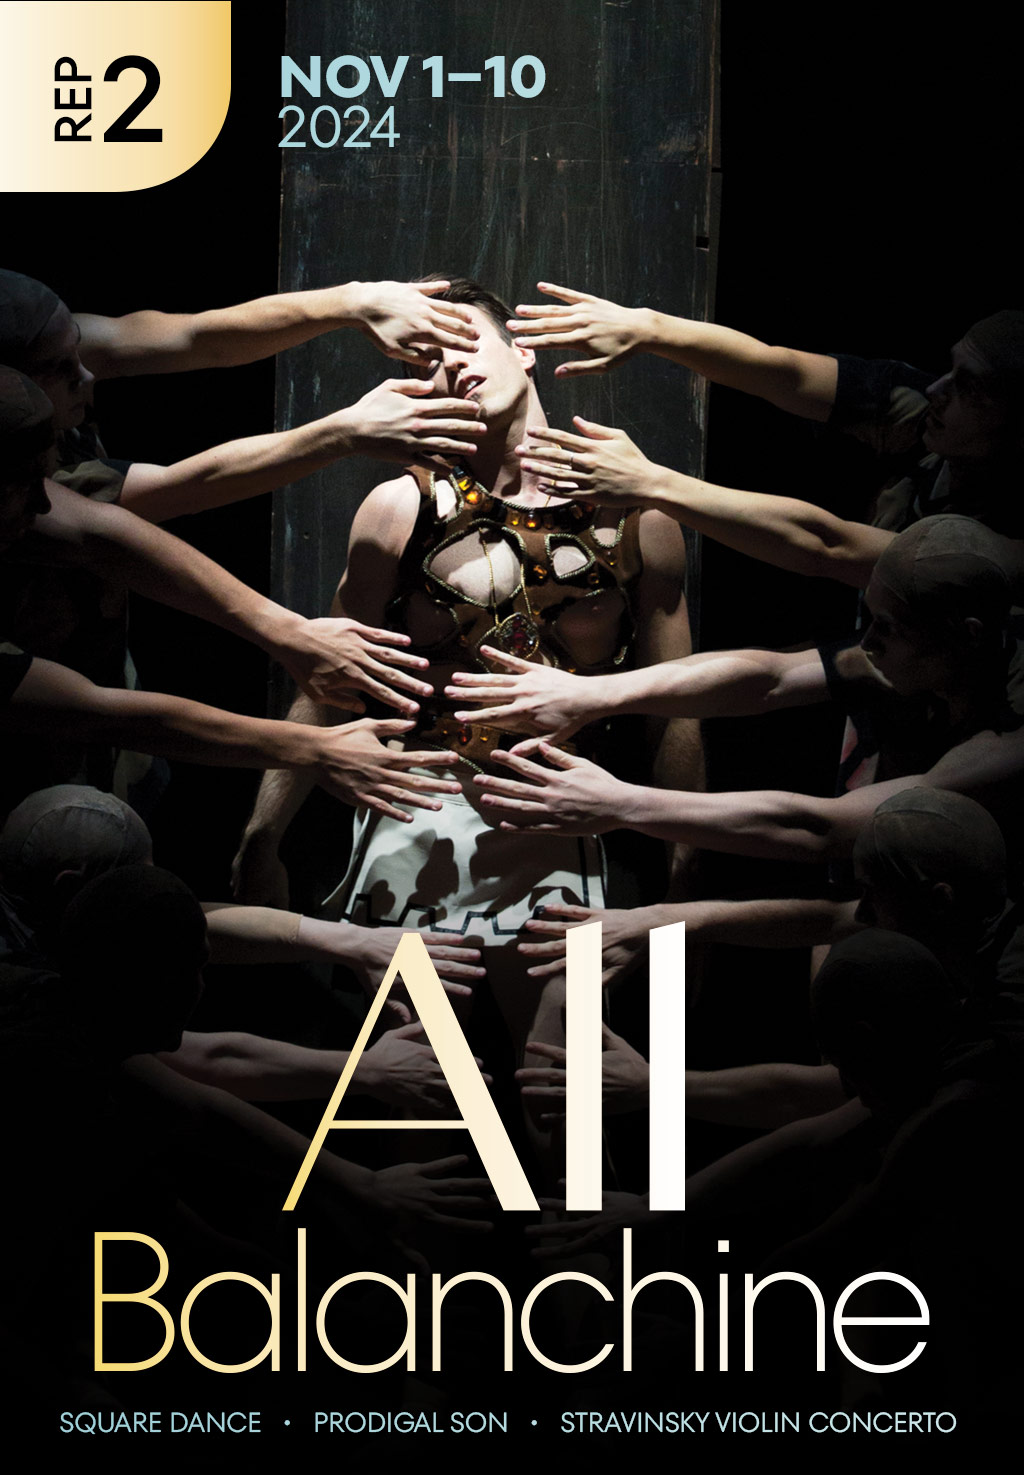 Rep 2: All Balanchine: November 1 - 10, 2024